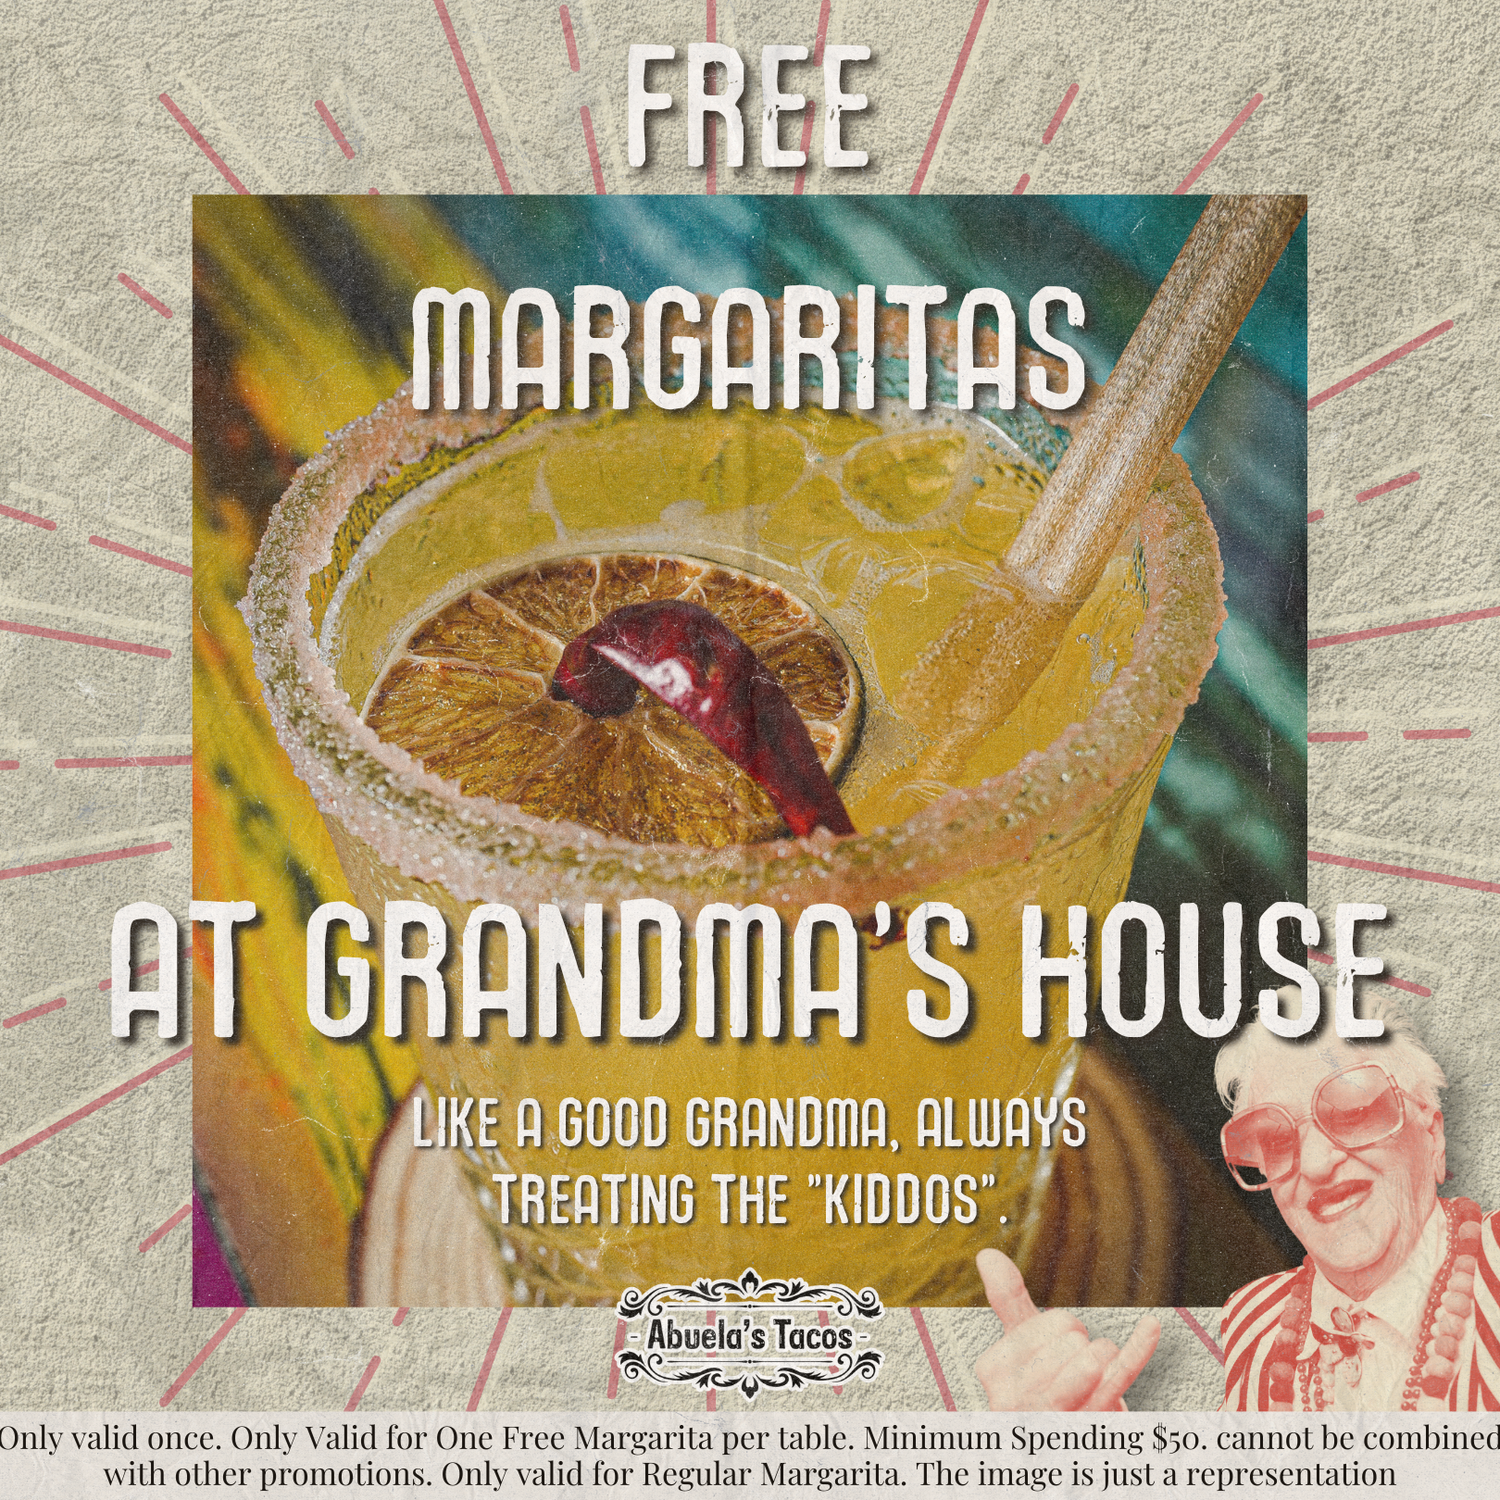 Free Margaritas in Miami Beach - Abuela's Tacos Mexican restaurant